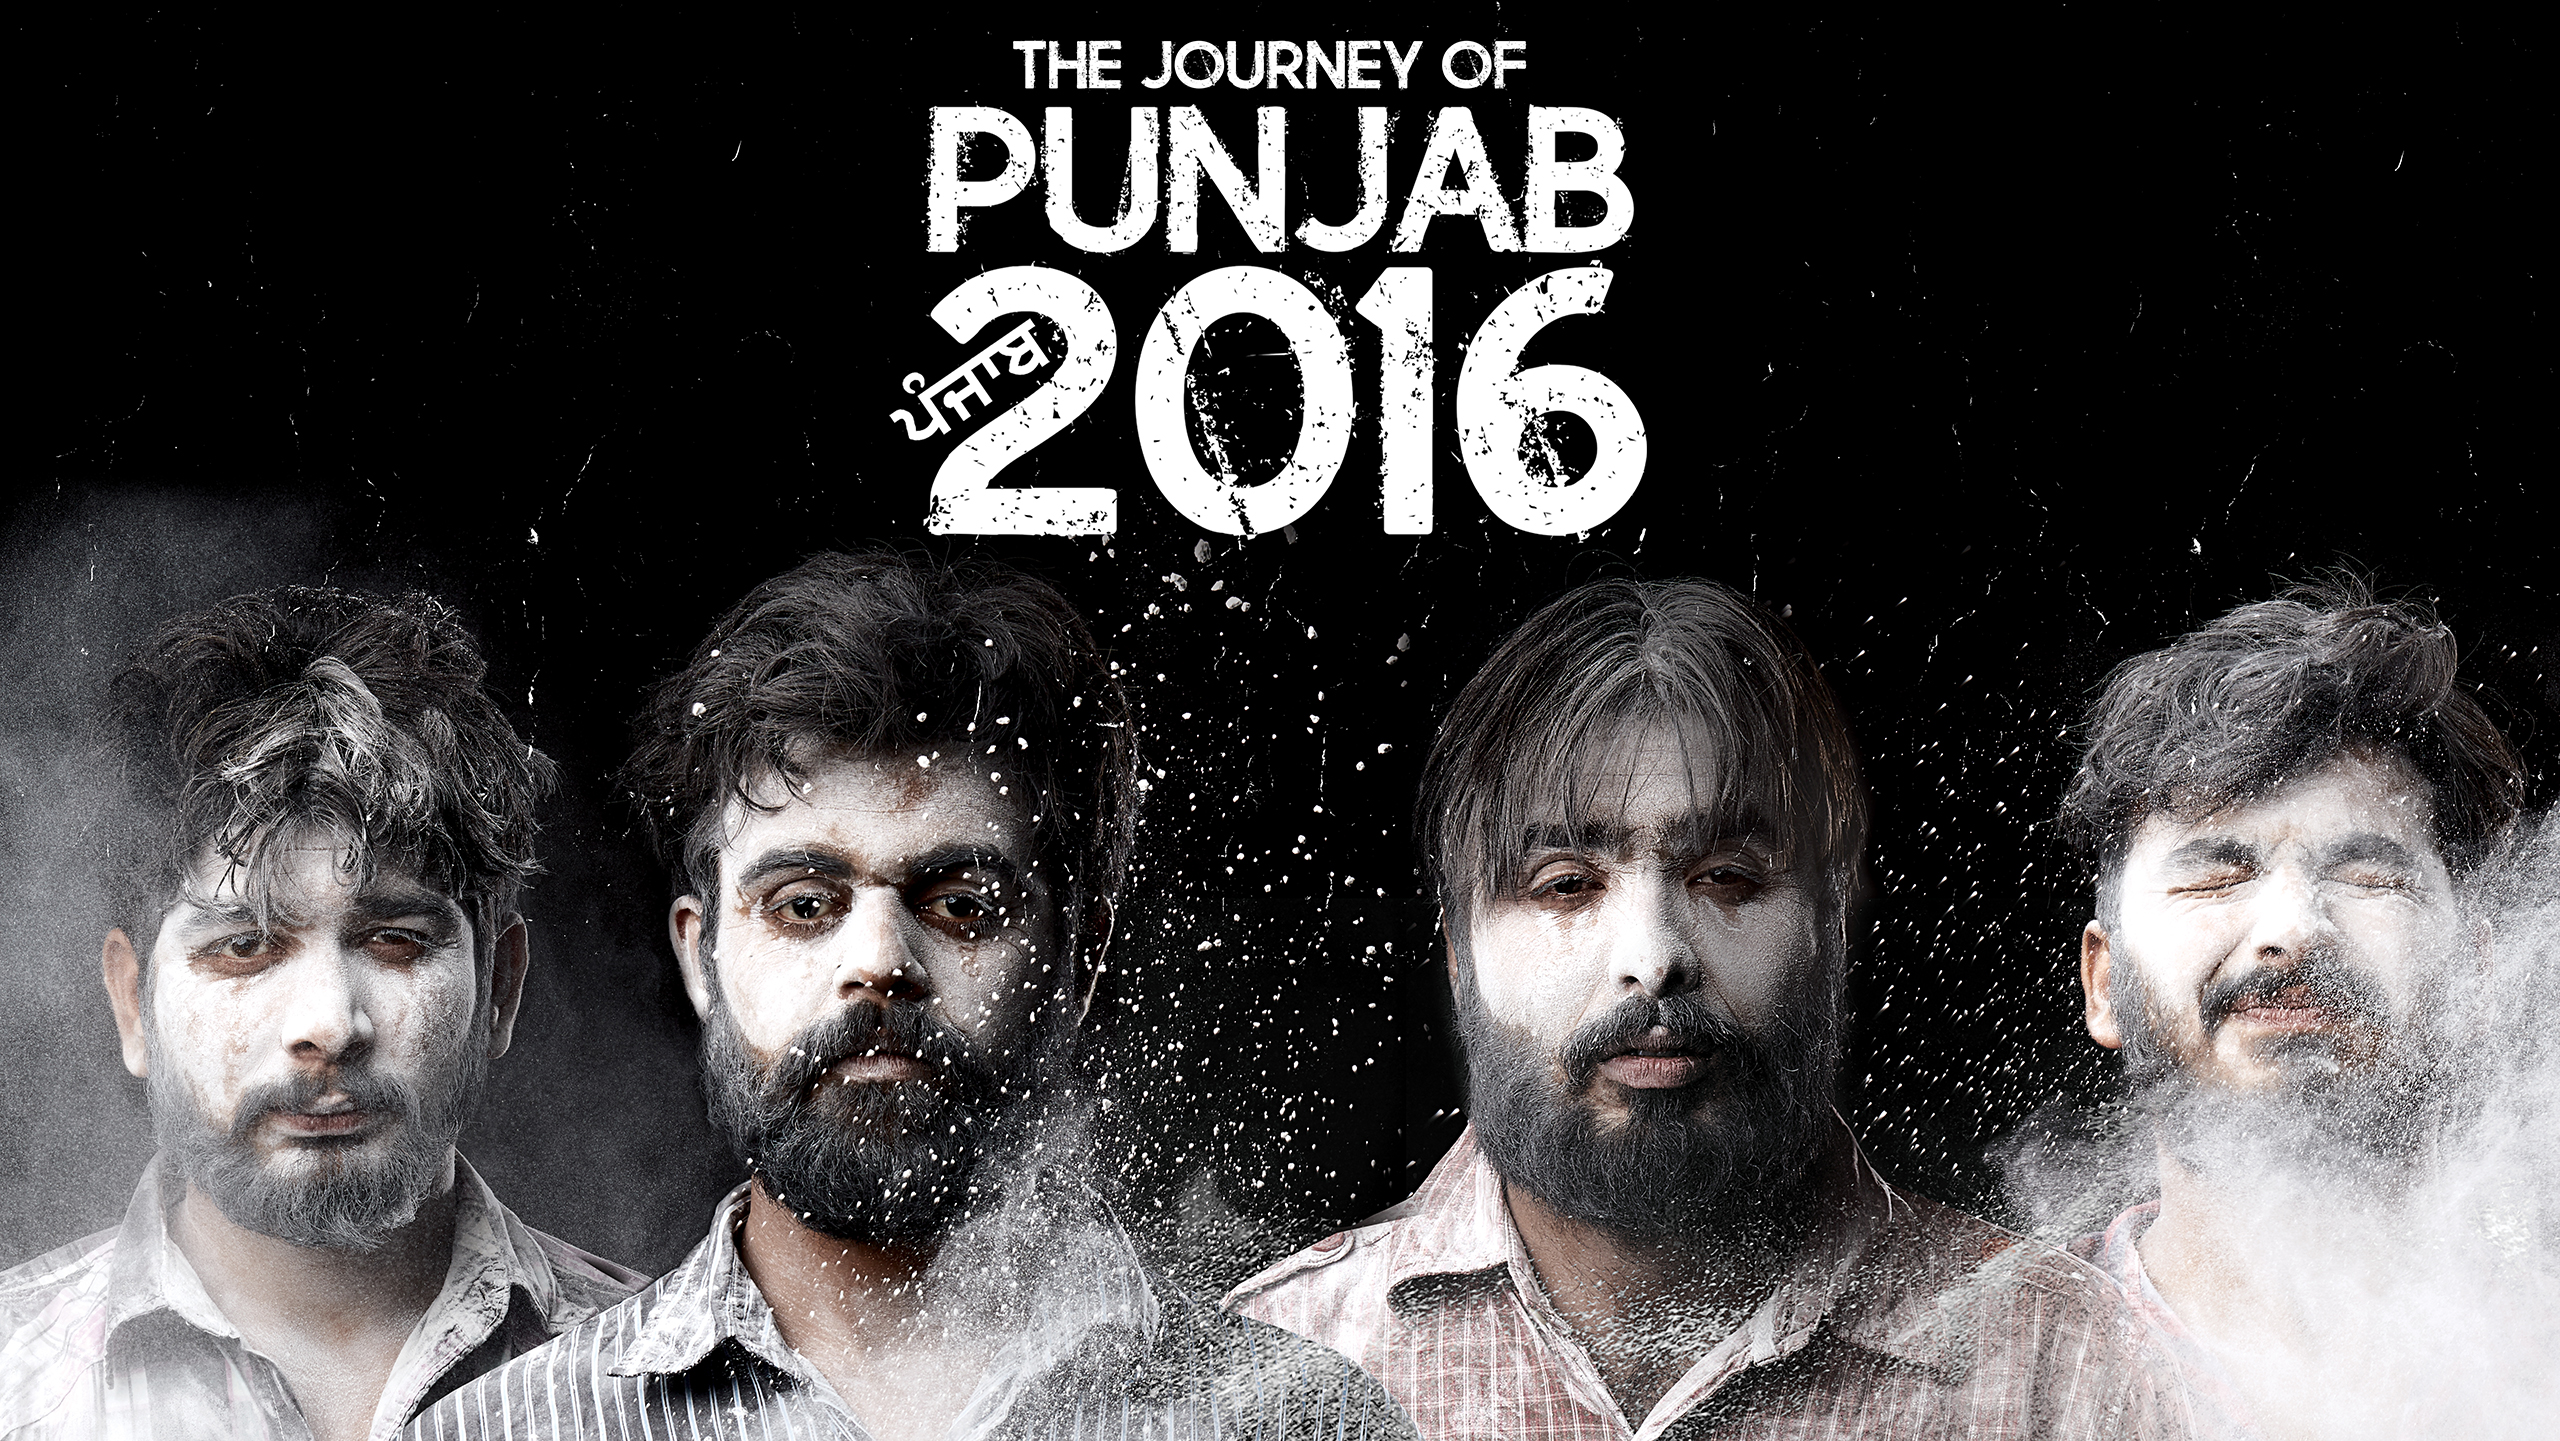 The Journey Of Punjab 2016